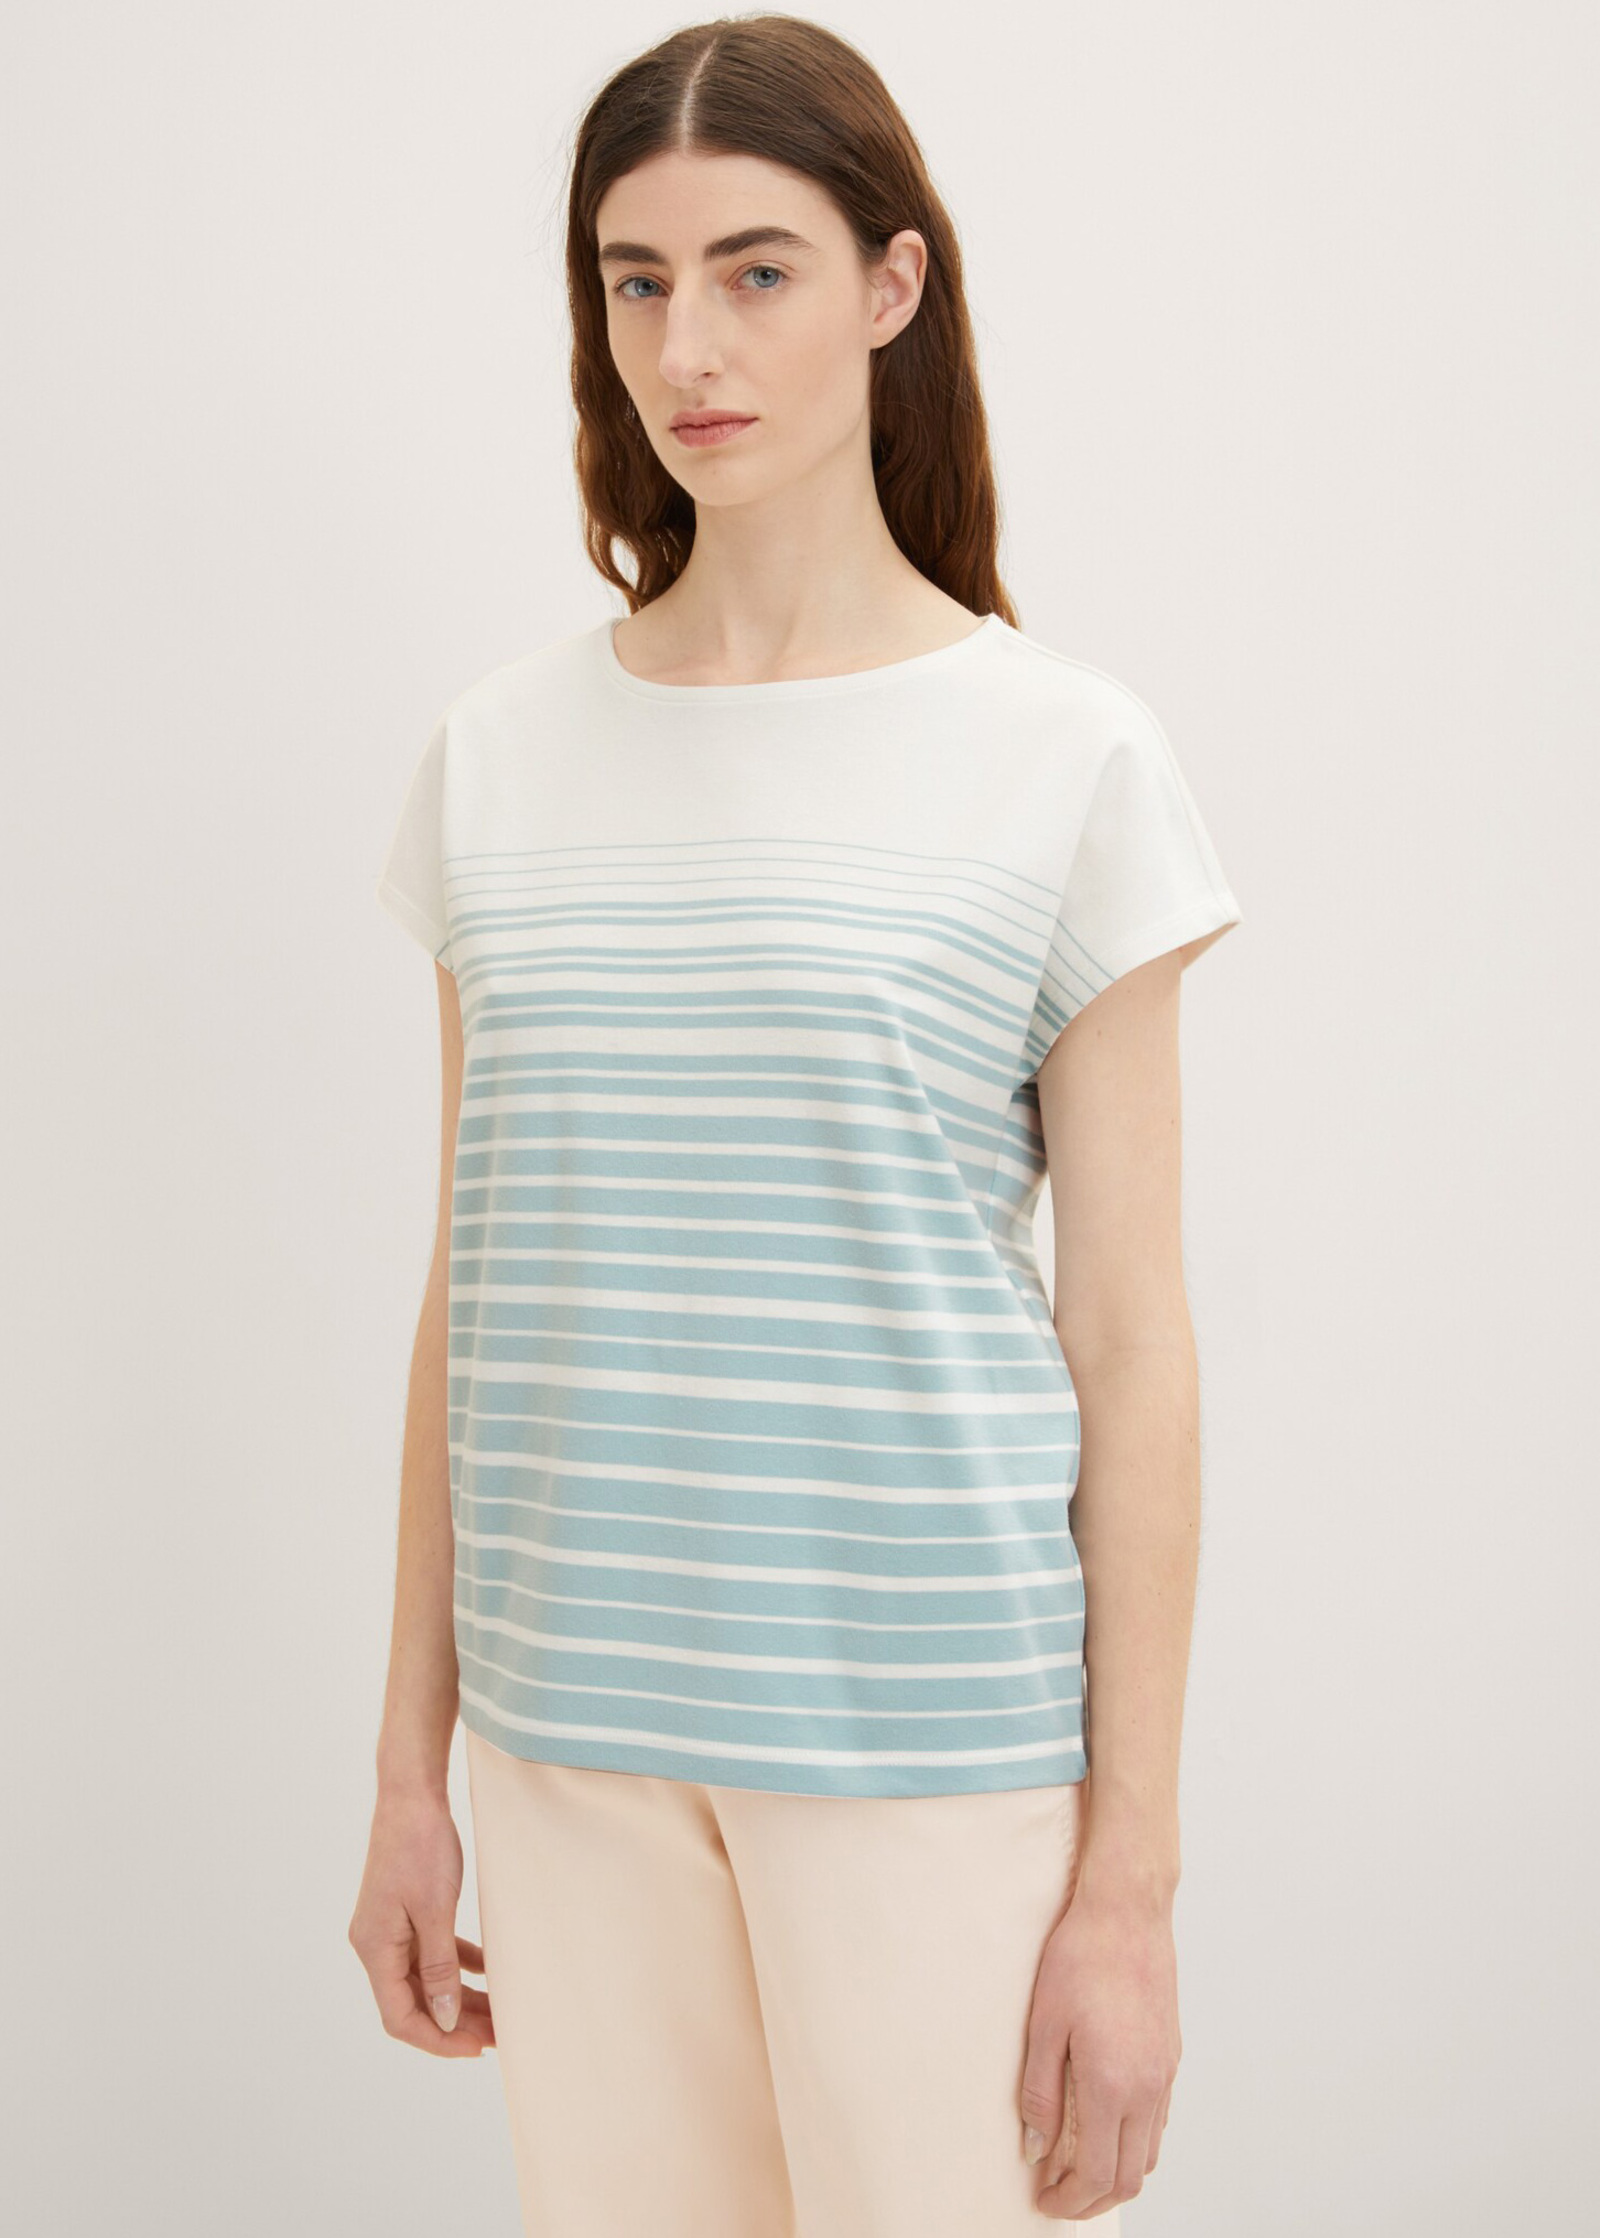 Tom Tailor Tshirt Blue Gradient Stripe - 1035480-31328 Size L